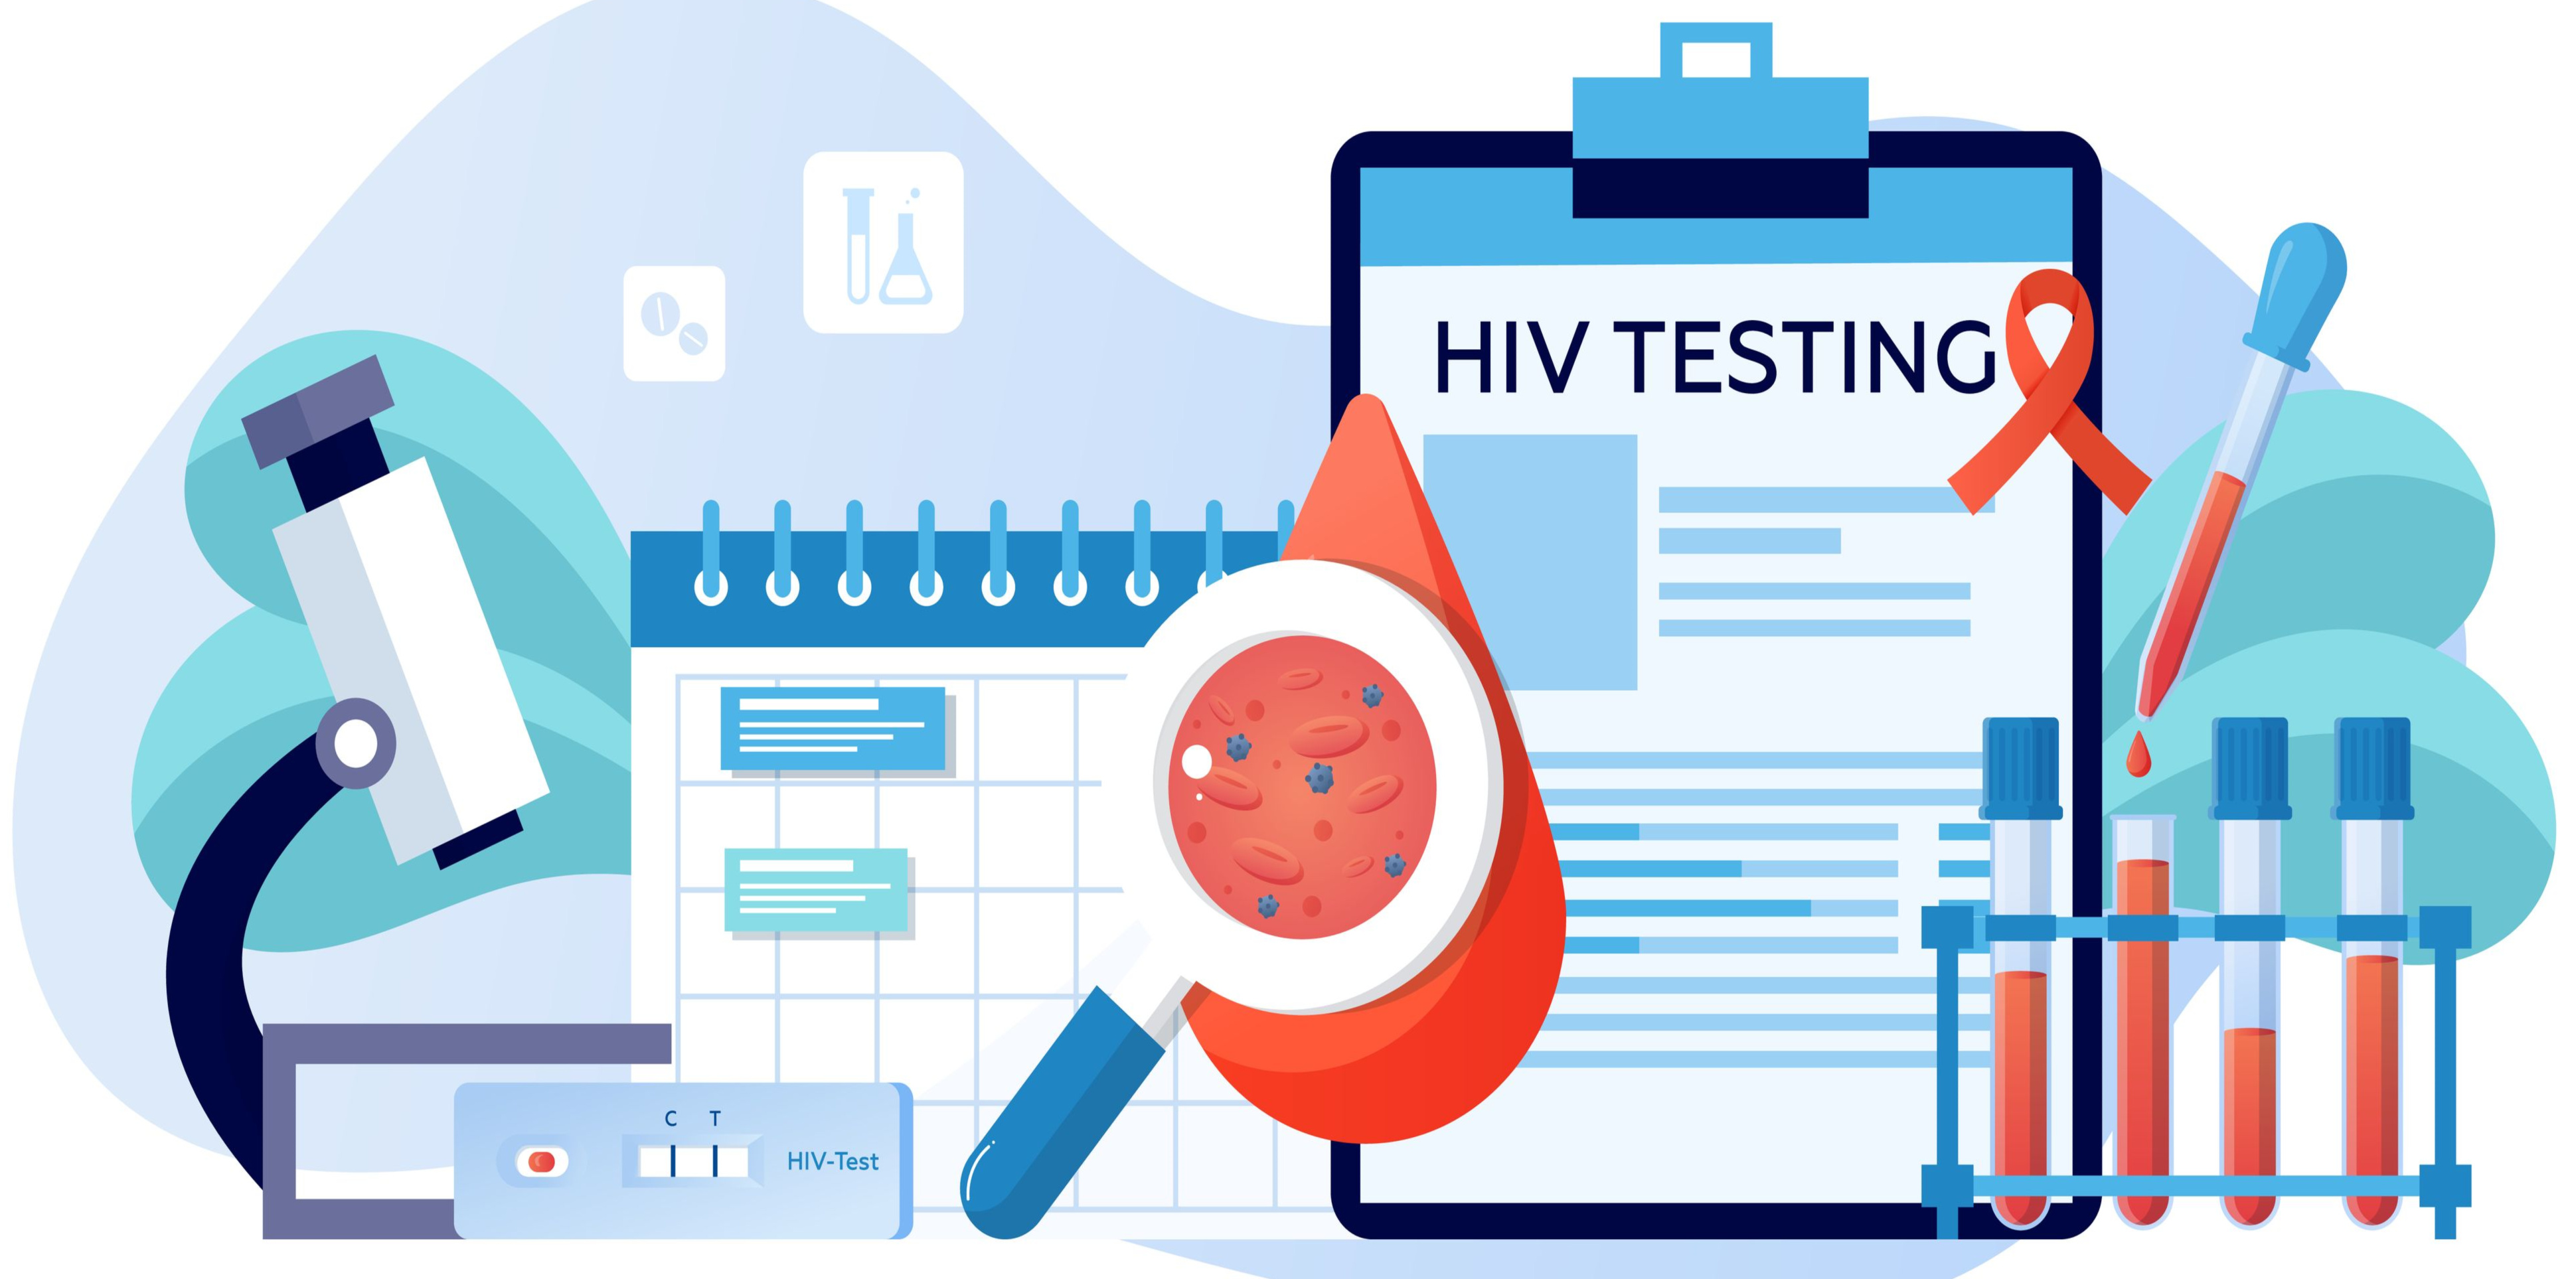 HIV/AIDS Awareness For Pediatricians